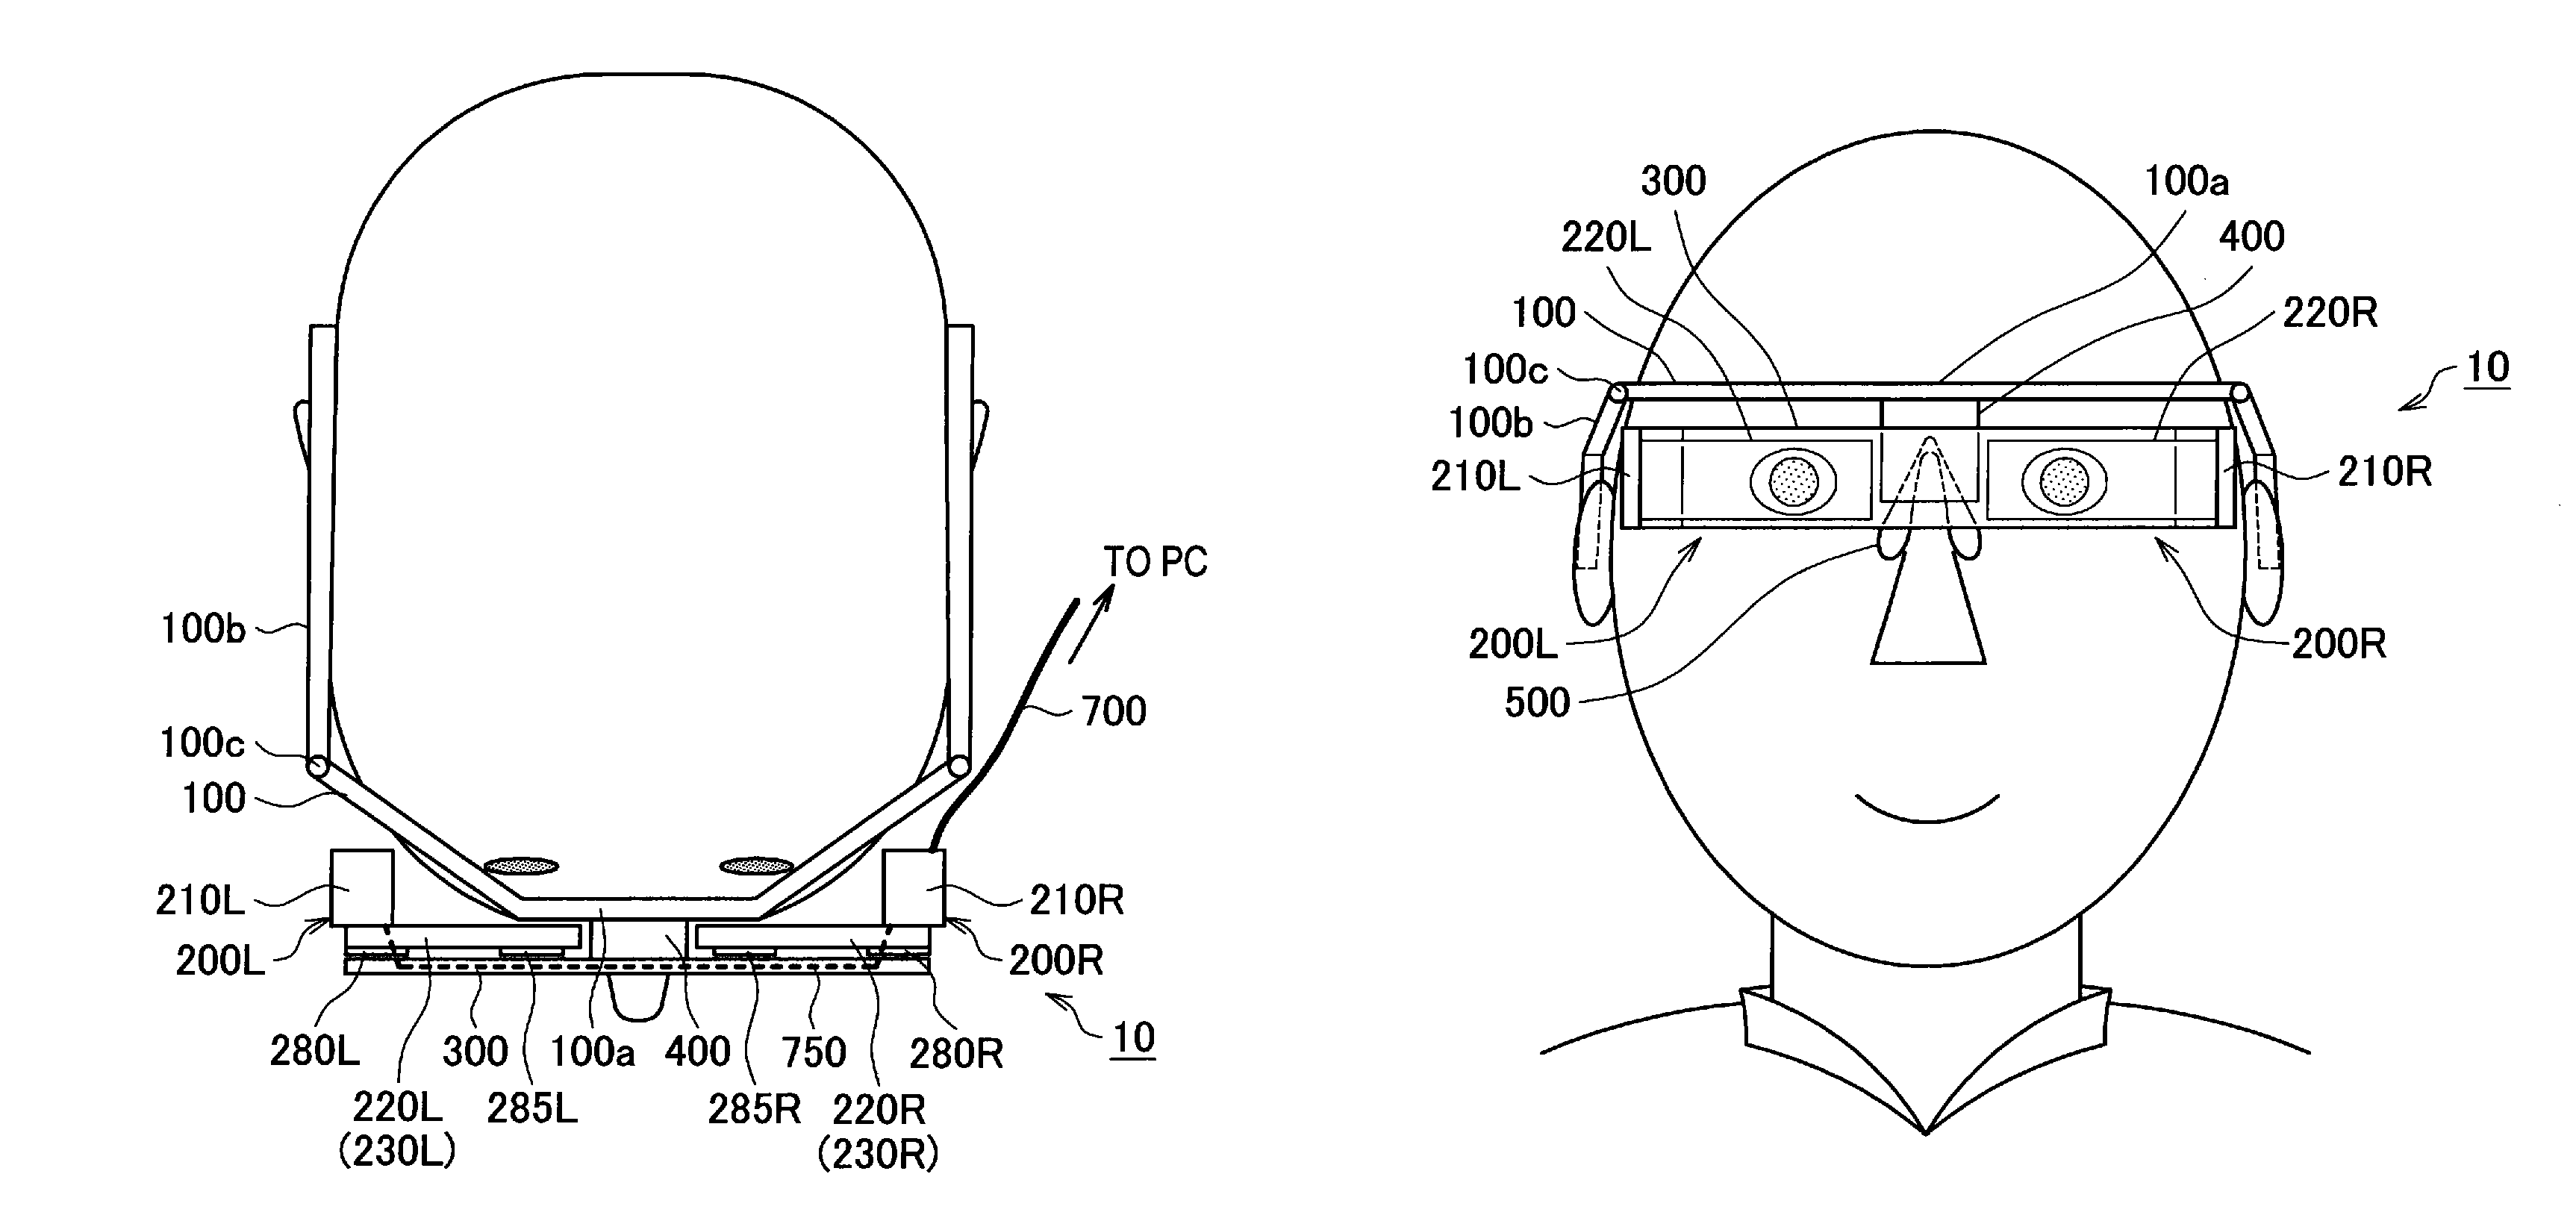 Head mounted display